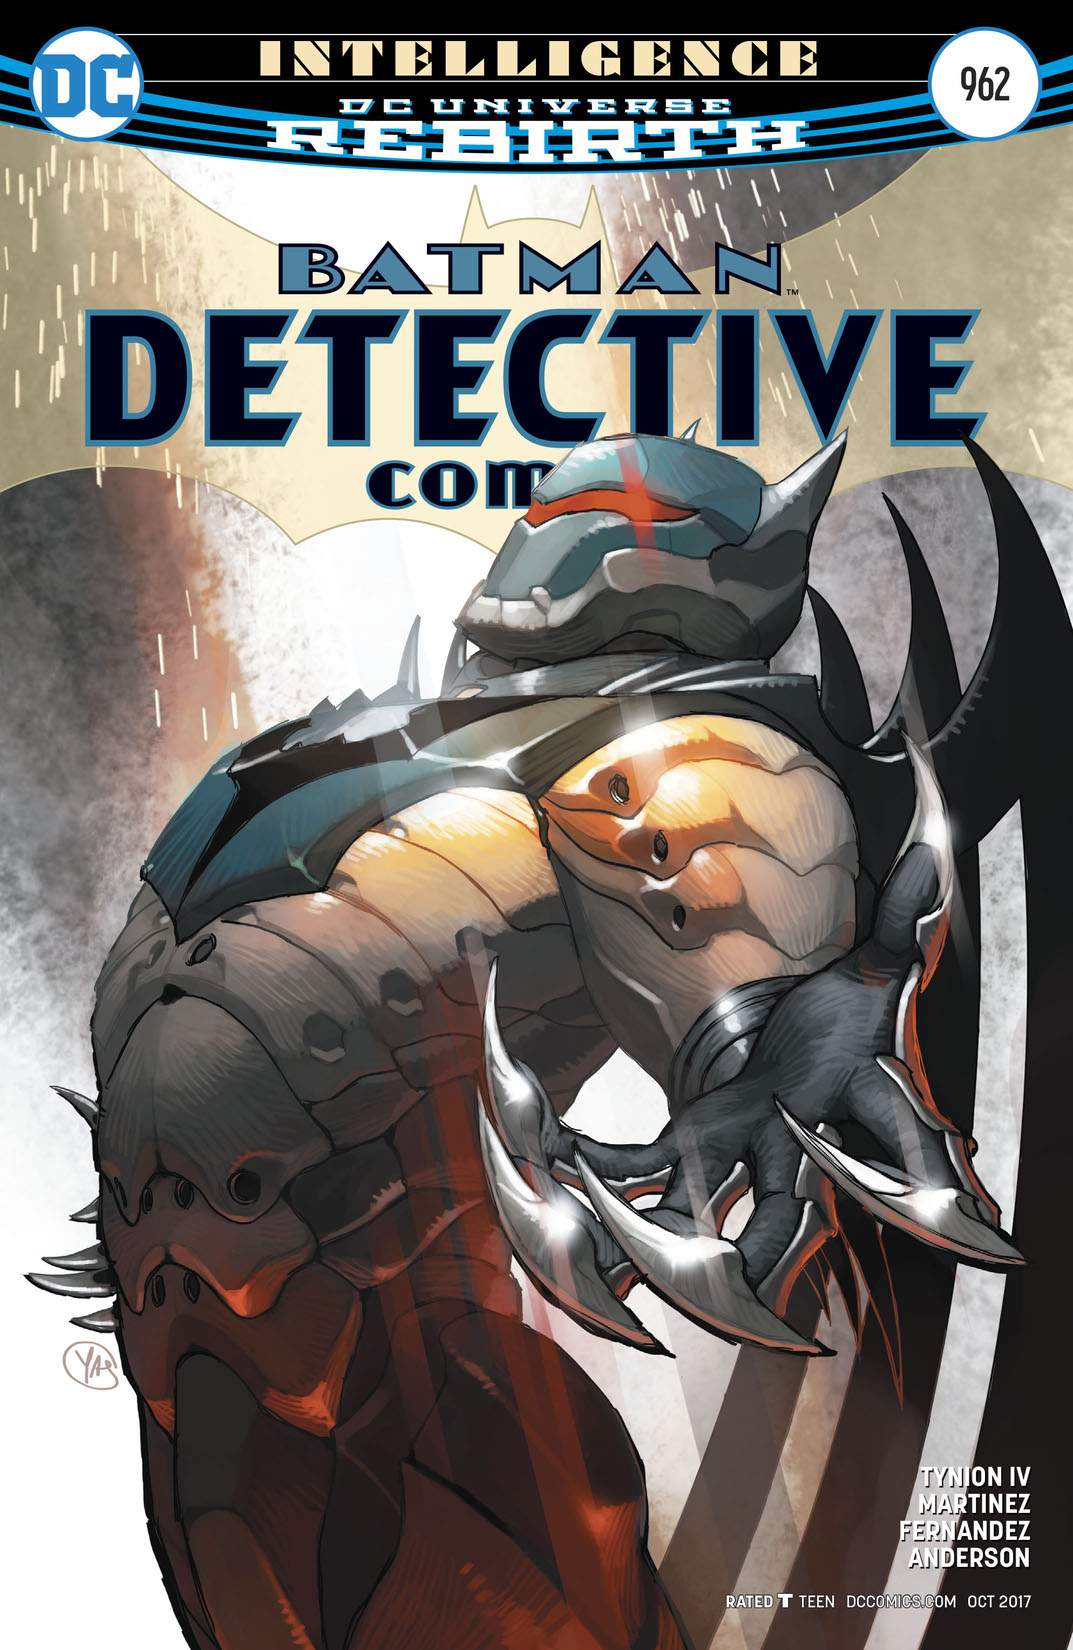 Detective Comics (2016-) #962 preview images